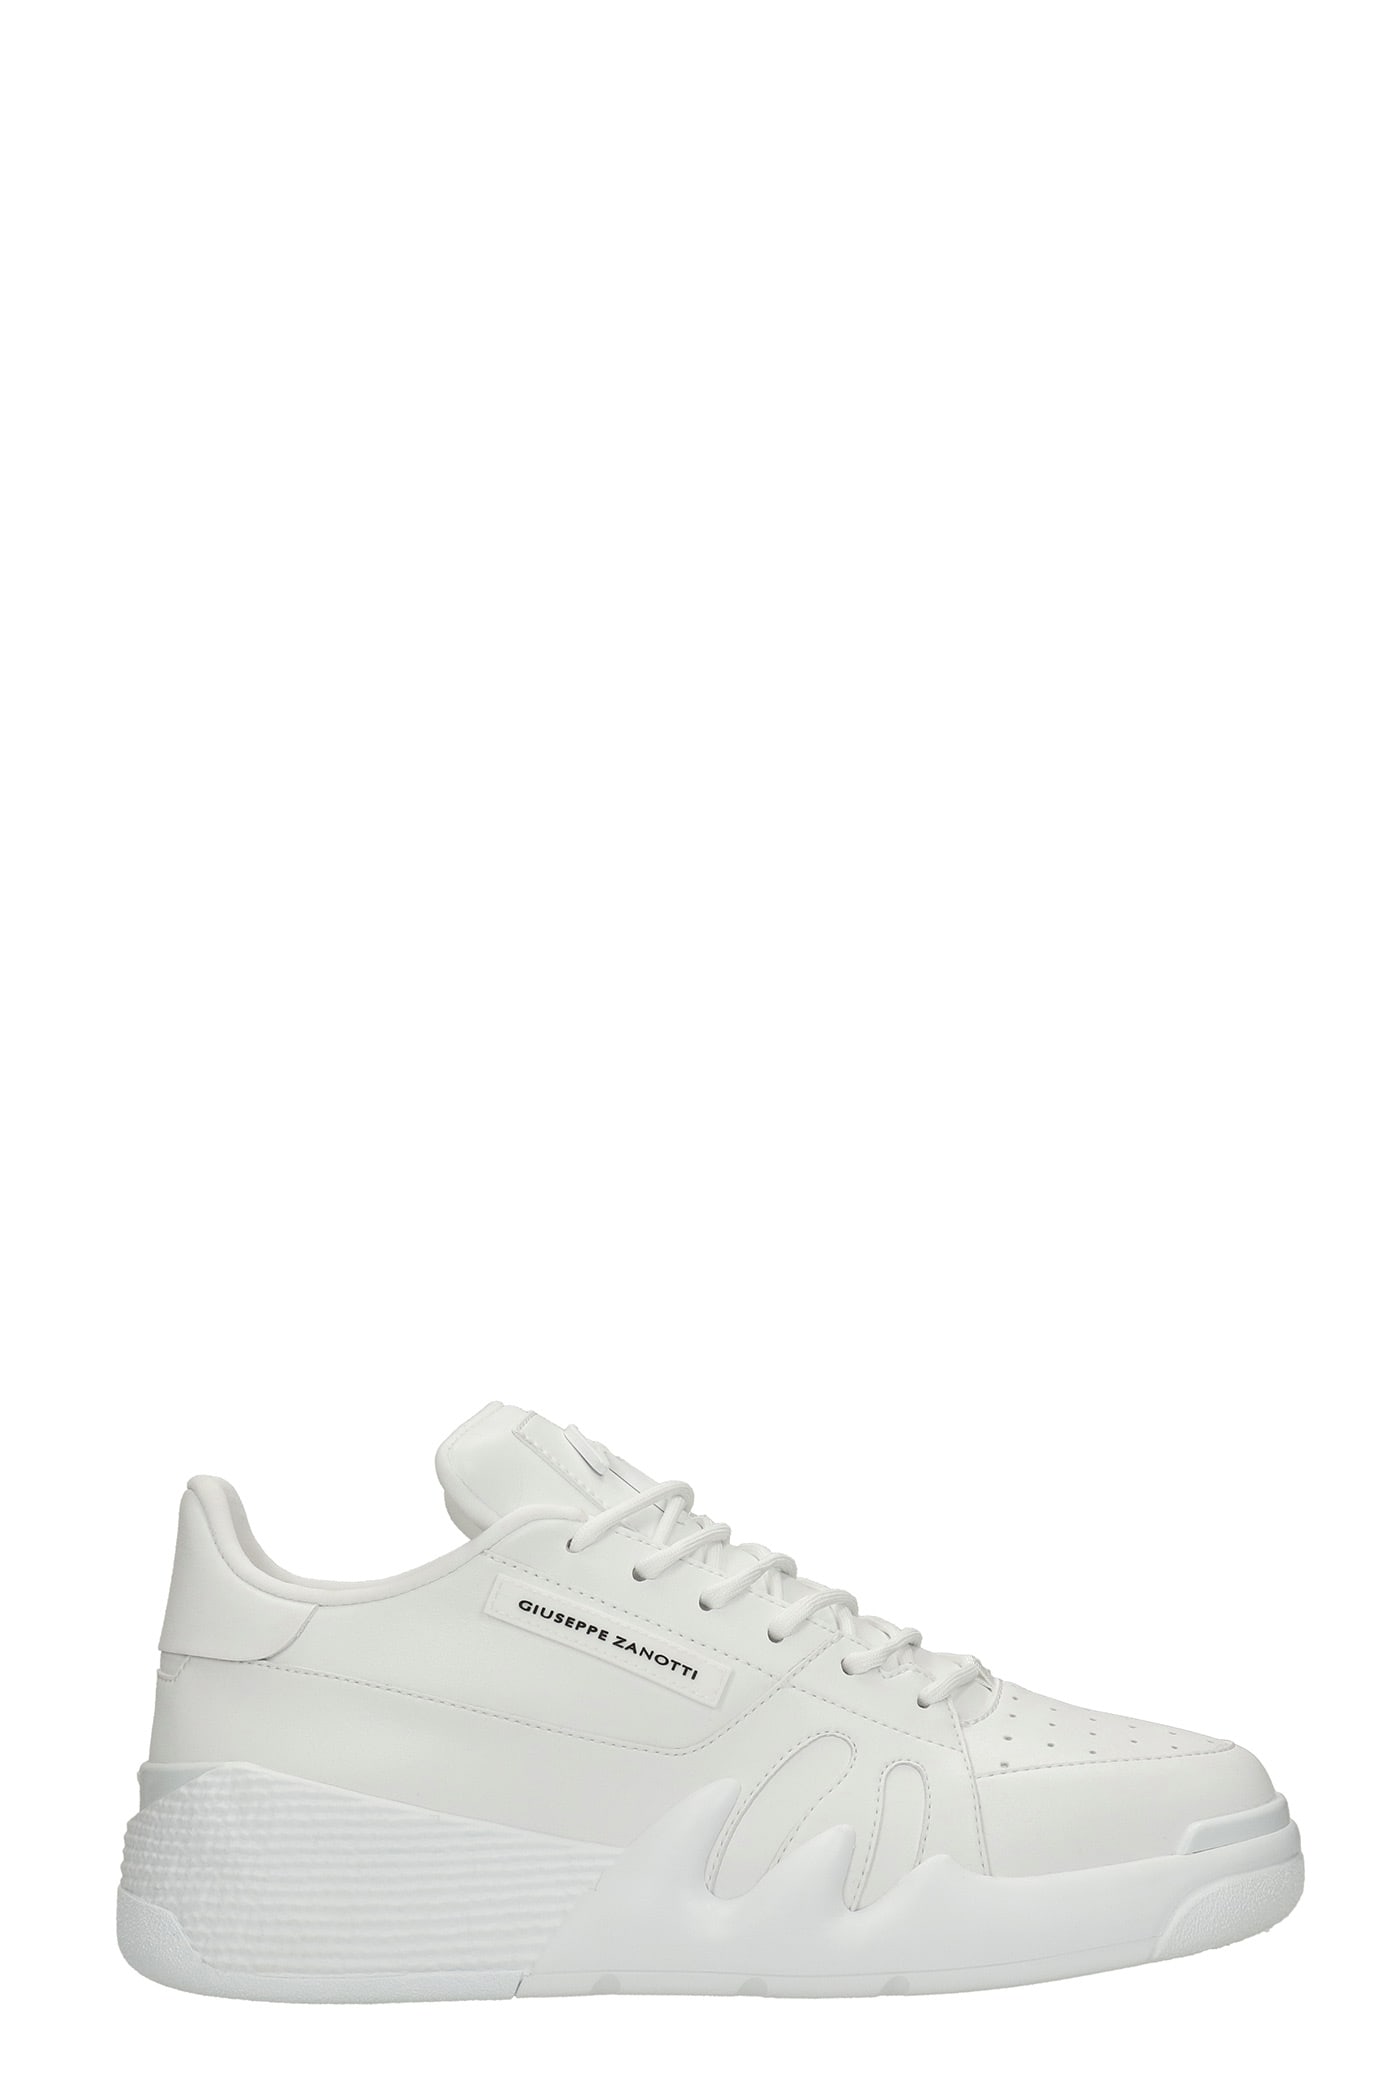 Giuseppe Zanotti Tallon Sneakers In White Leather